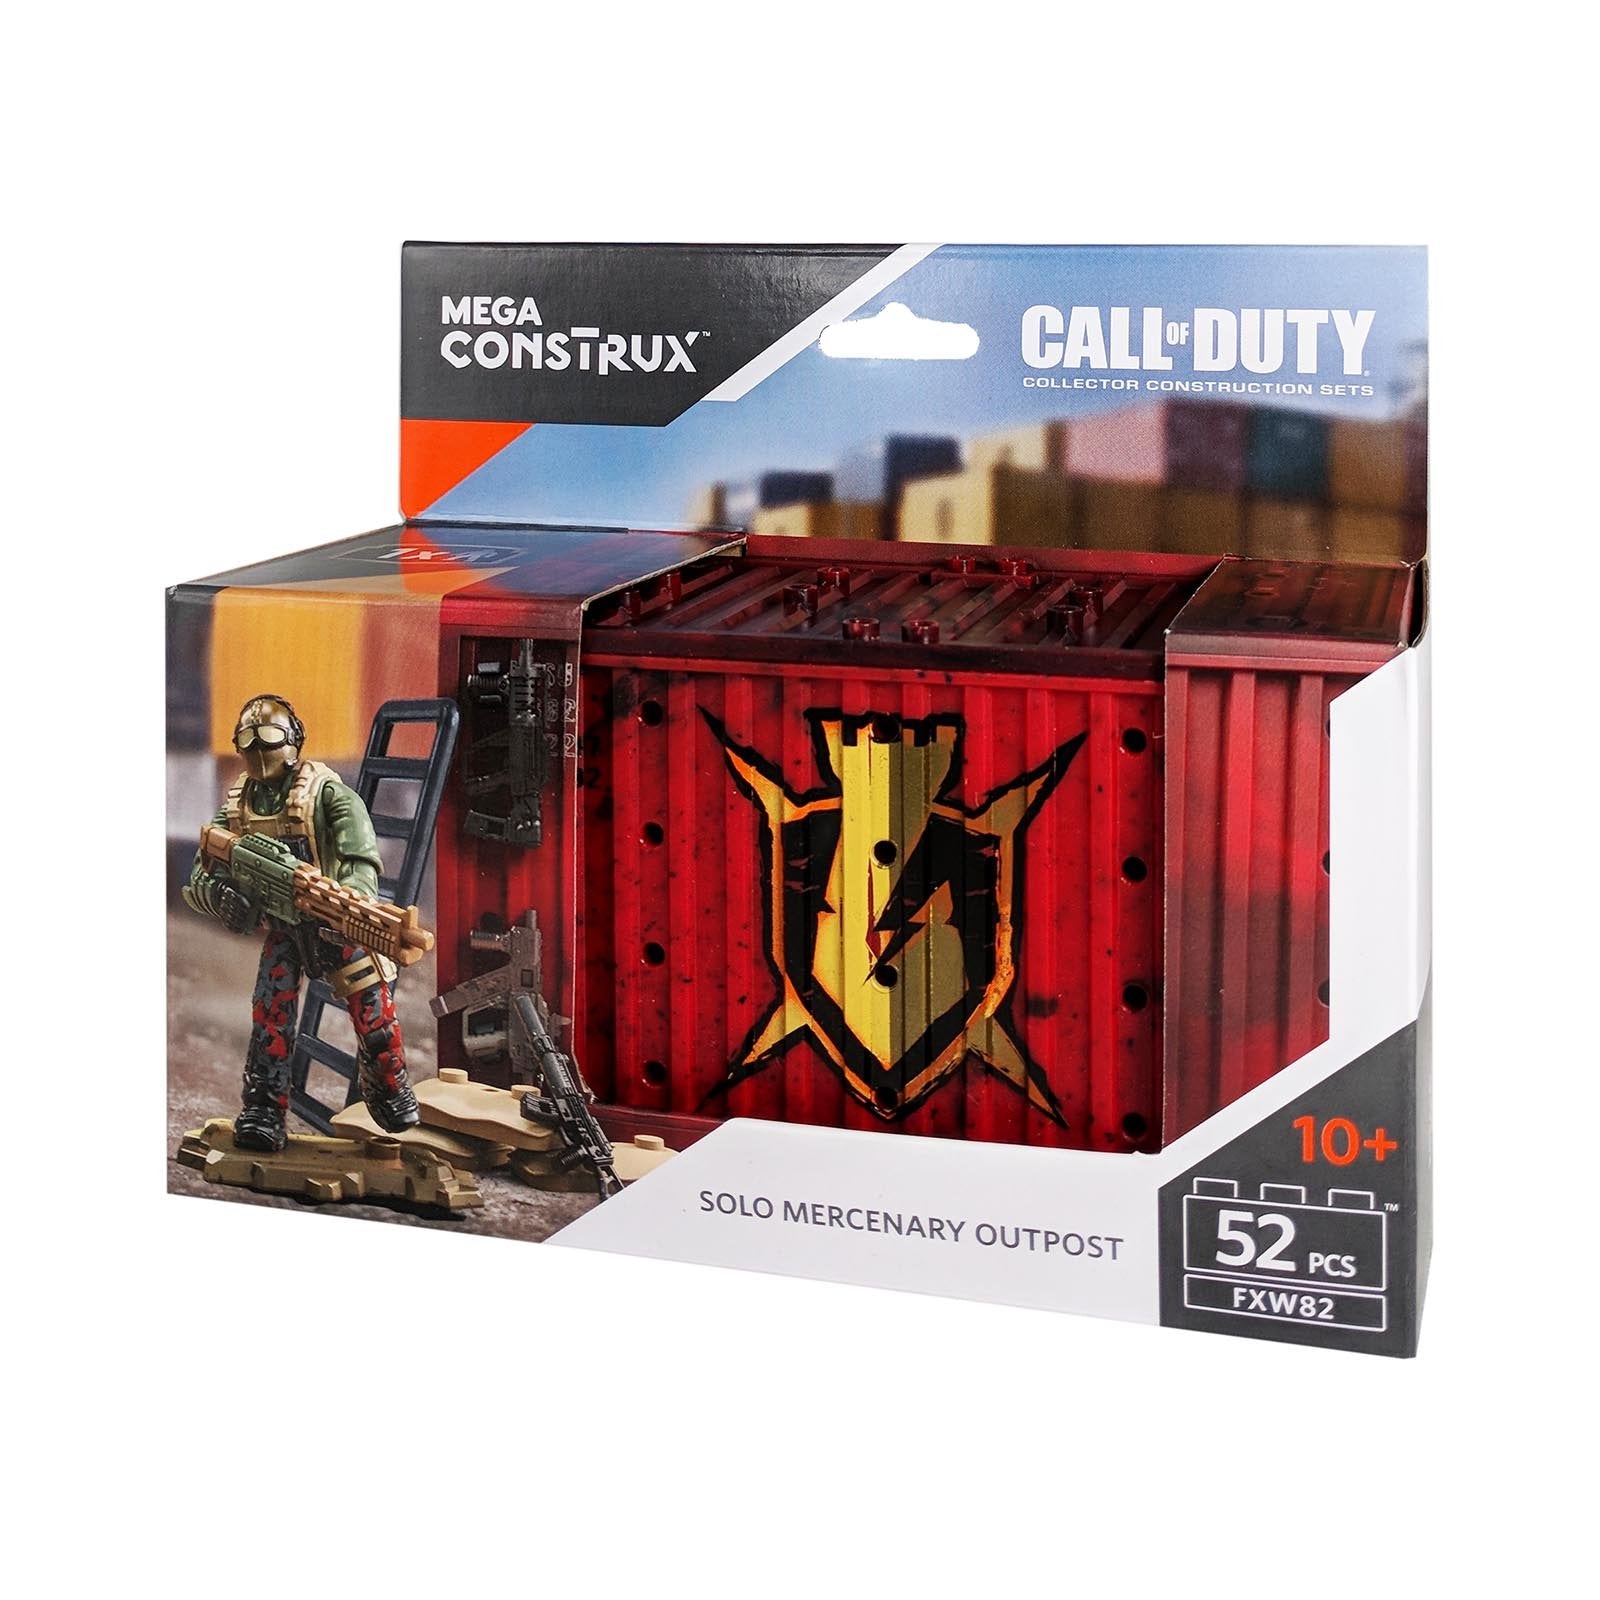 Solo Mercenary Outpost - Mega Construx Call of Duty Set